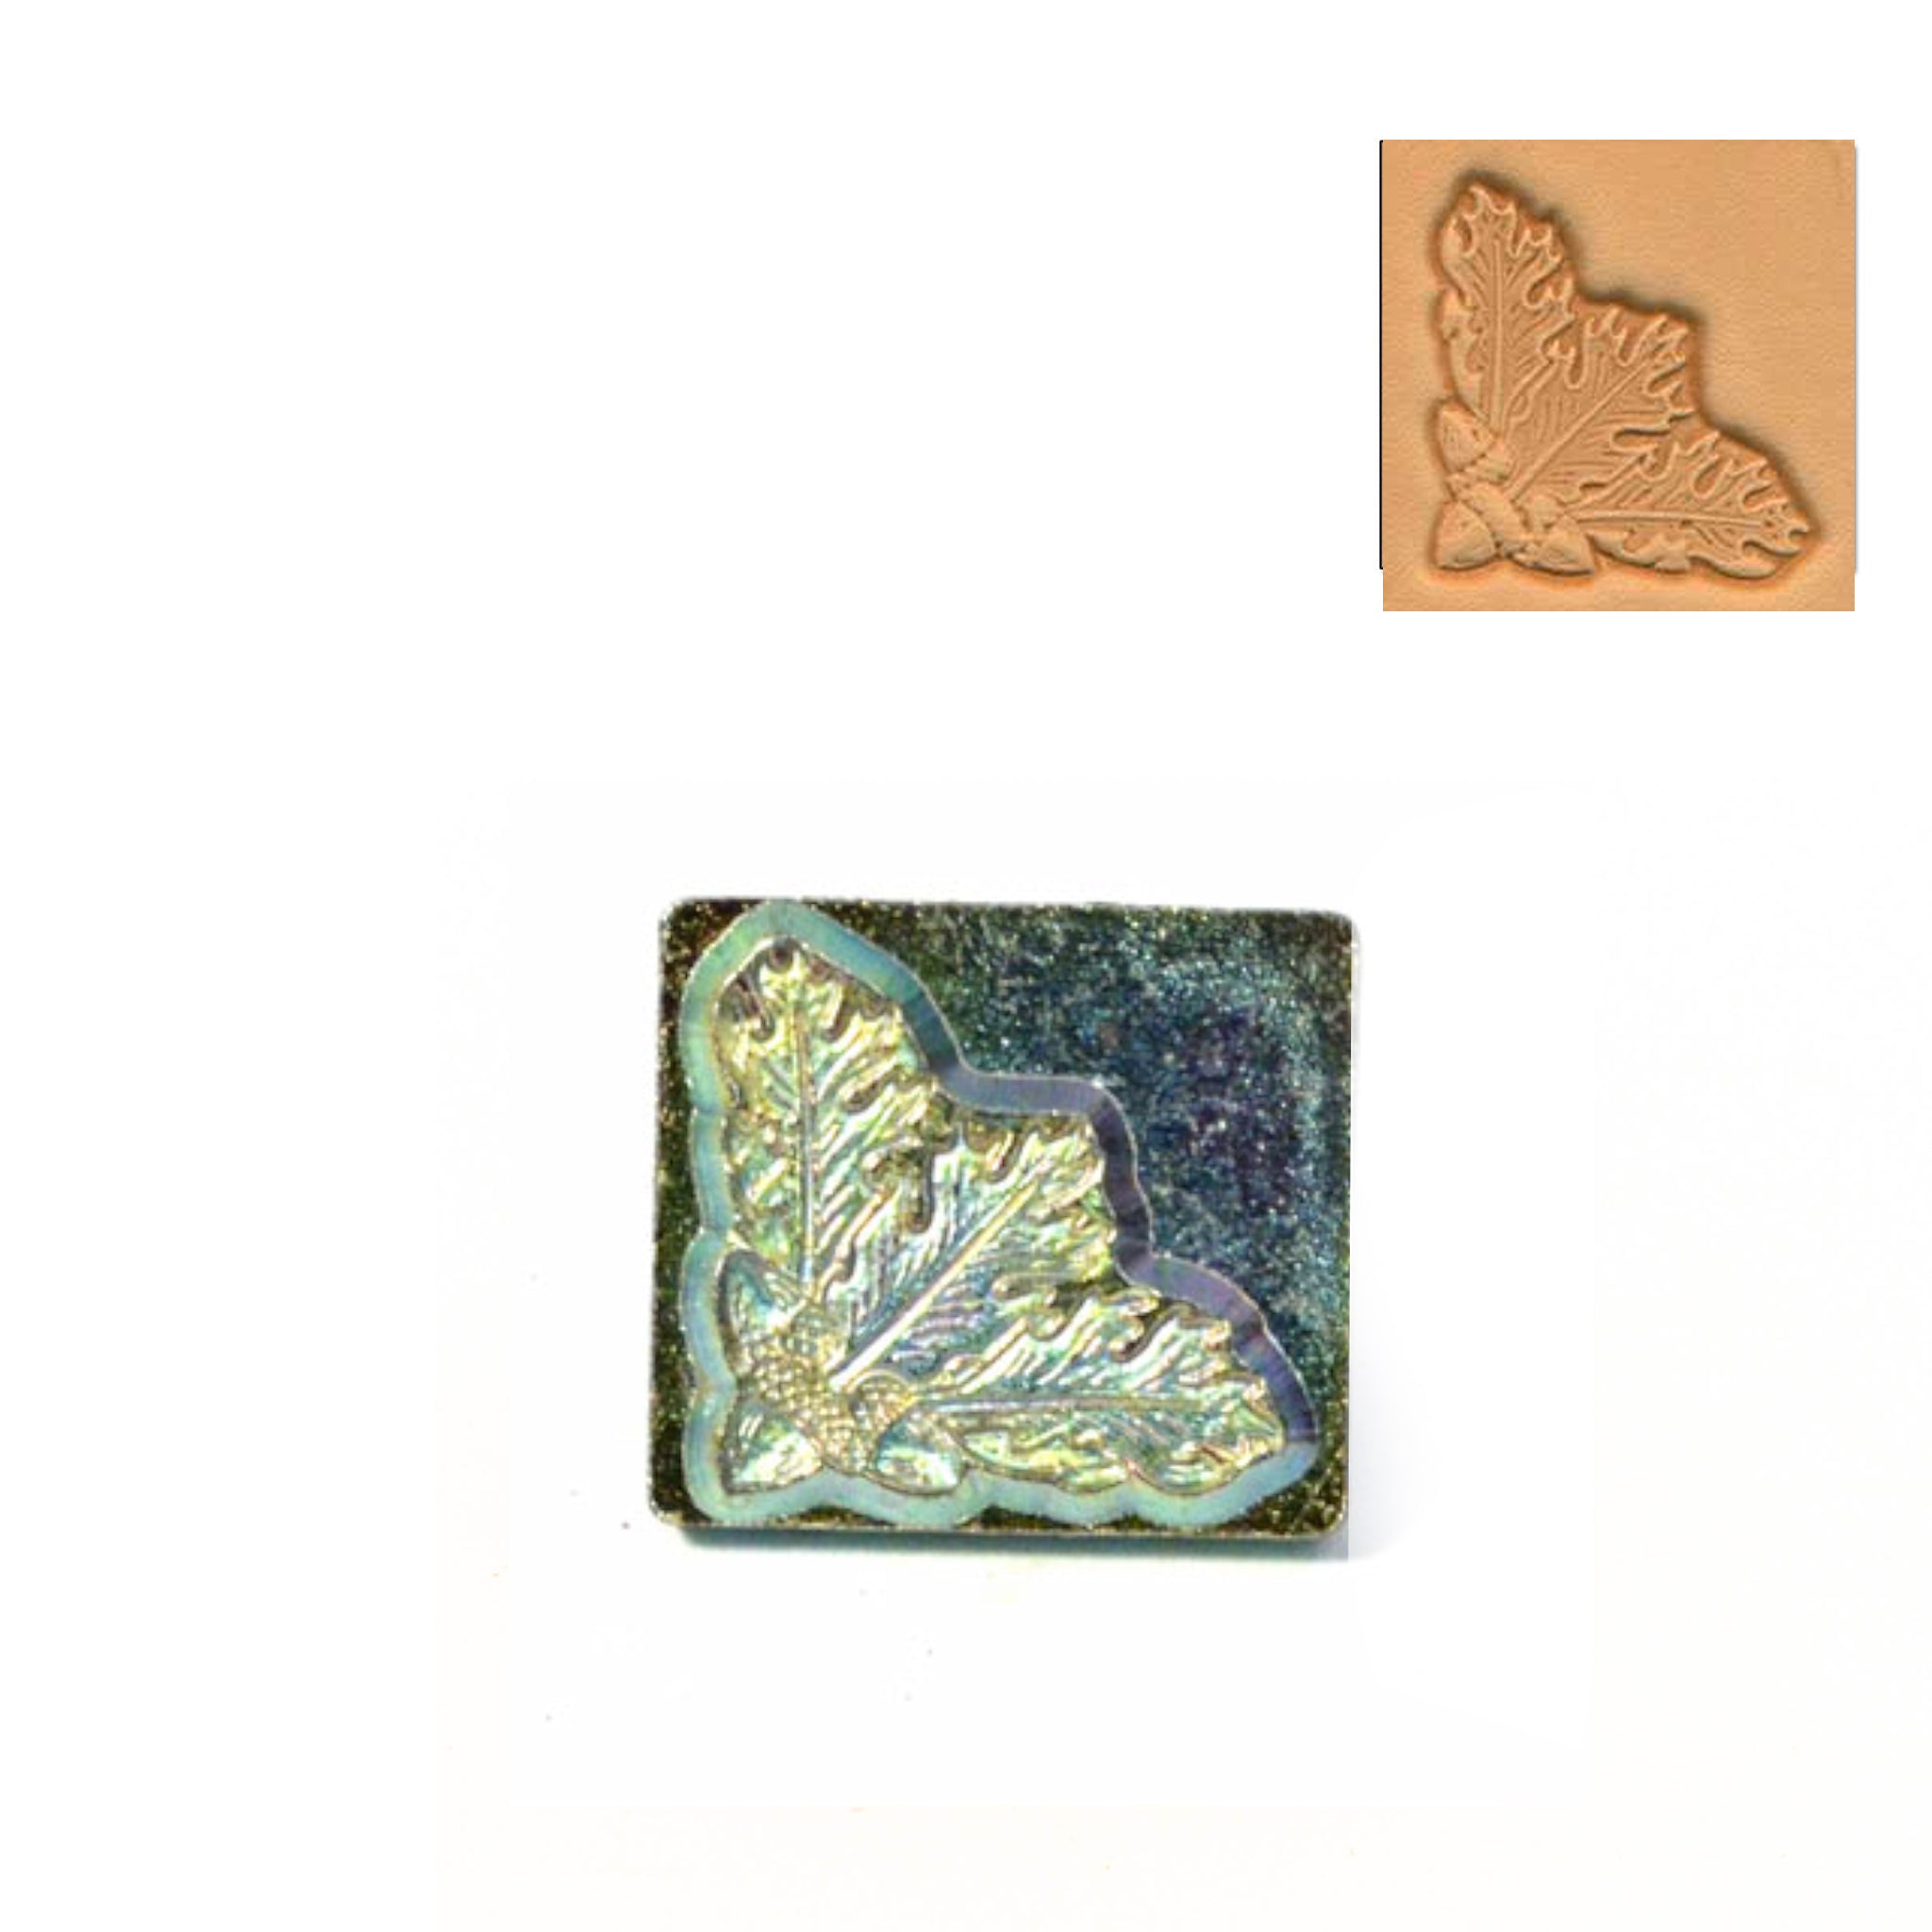 Oak Leaf Corner 3D Embossing Stamp from Identity Leathercraft